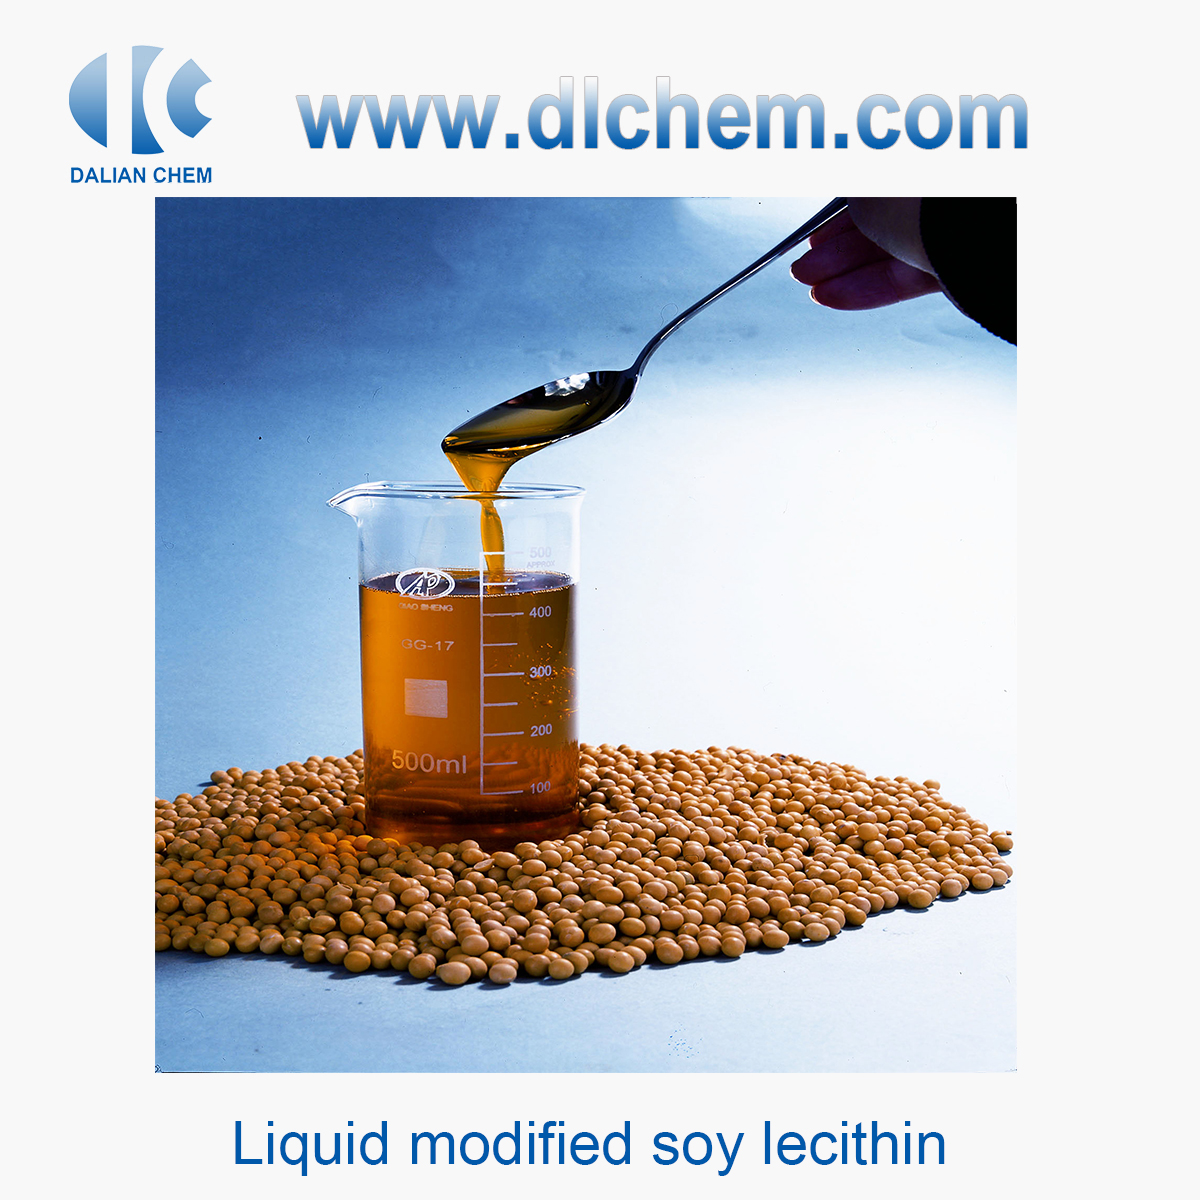 Liquid modified soy lecithin